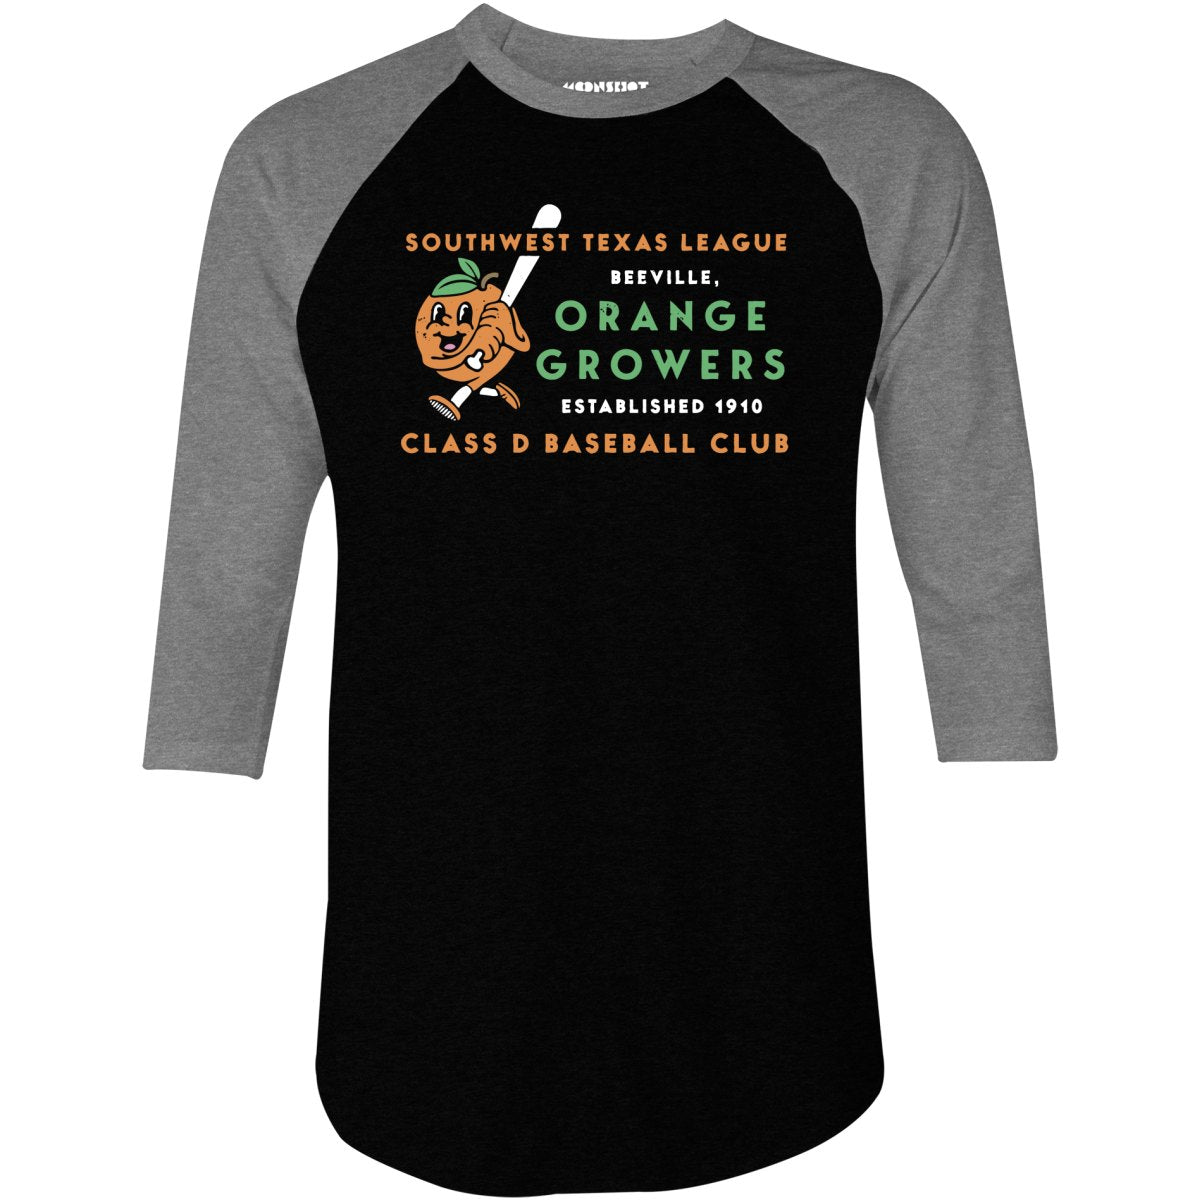 Beeville Orange Growers - Texas - Vintage Defunct Baseball Teams - 3/4 Sleeve Raglan T-Shirt